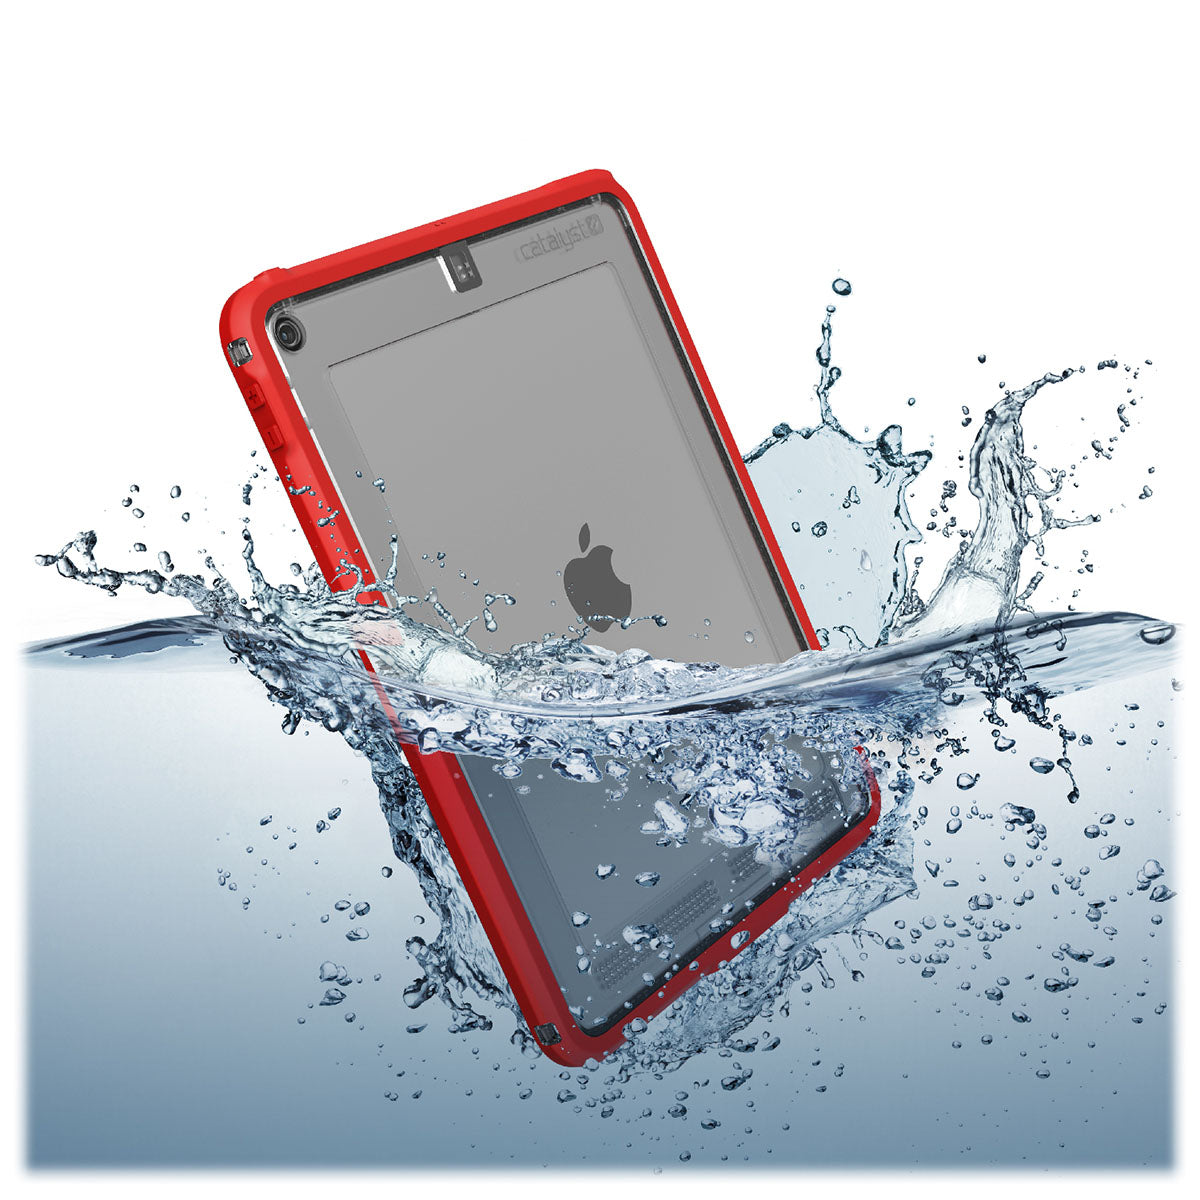 catalyst ipad air gen 3 10.5 waterproof case flame red half is submerged in water